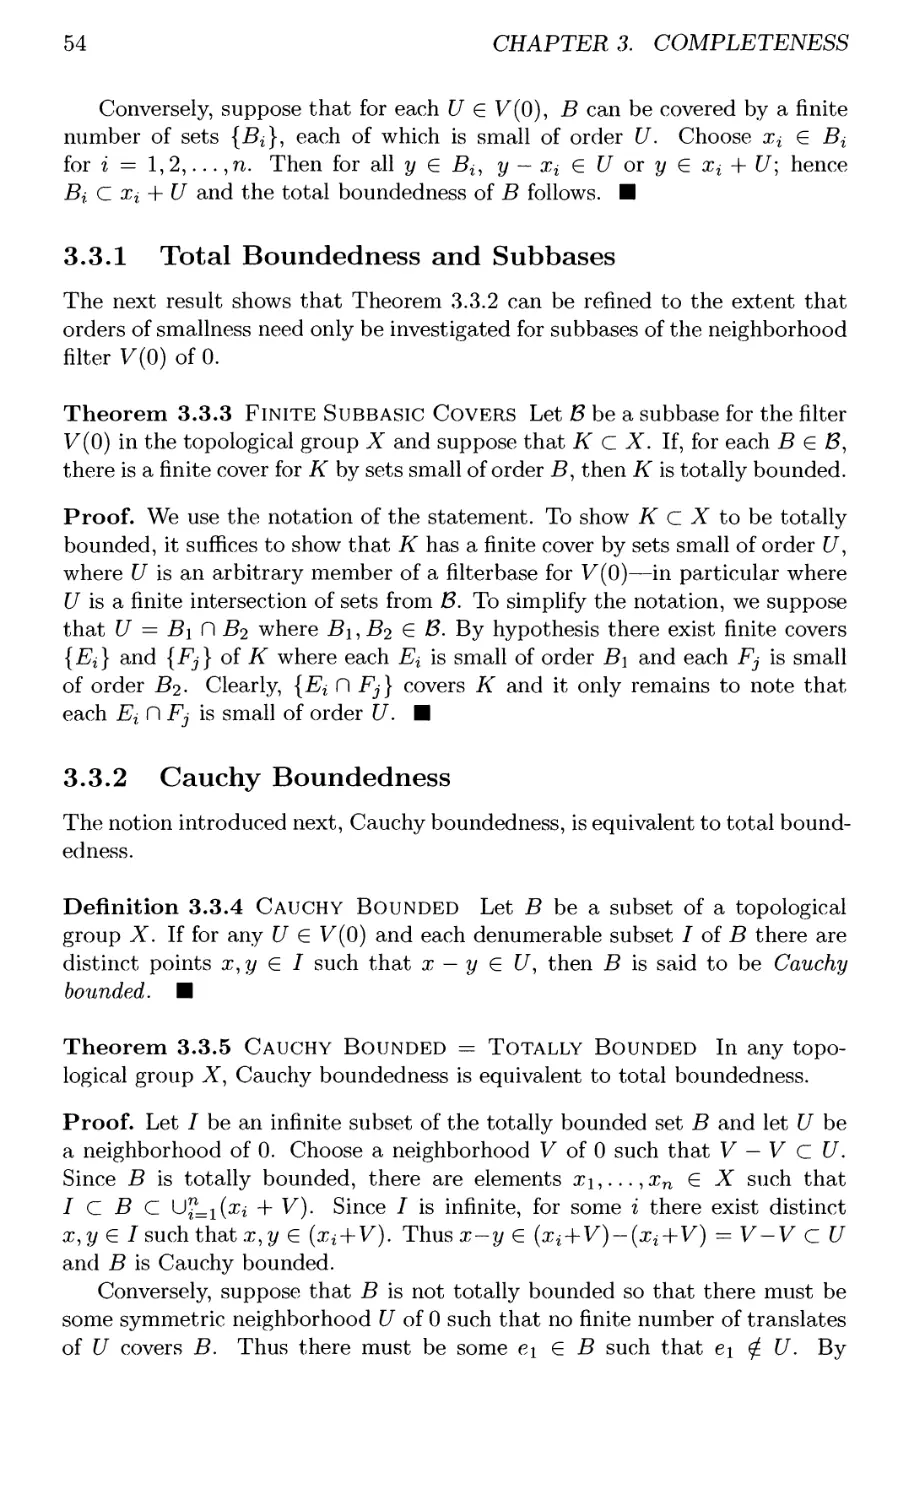 3.3.2 Cauchy Boundedness